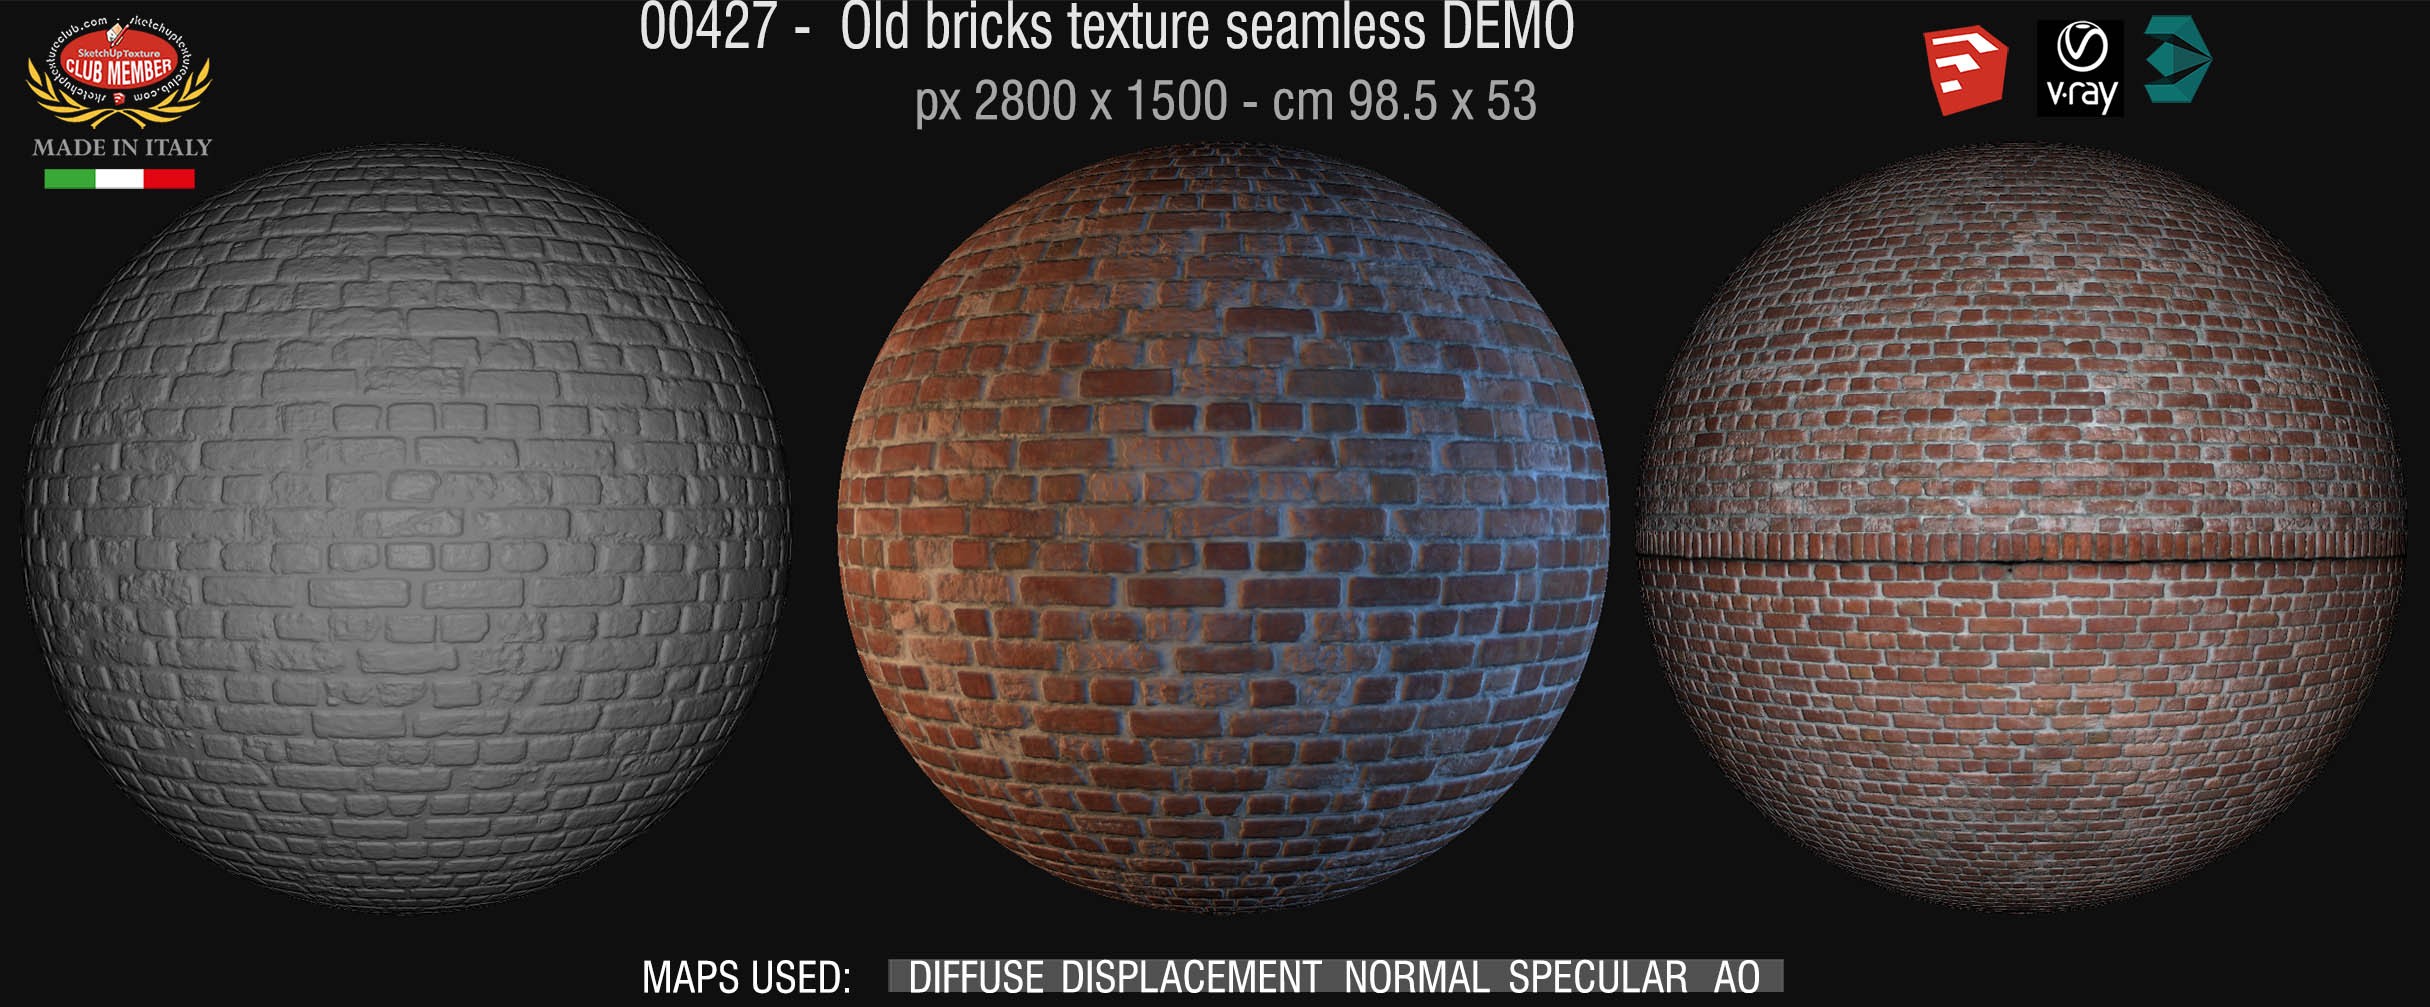 00427 Old bricks texture seamless + maps DEMO